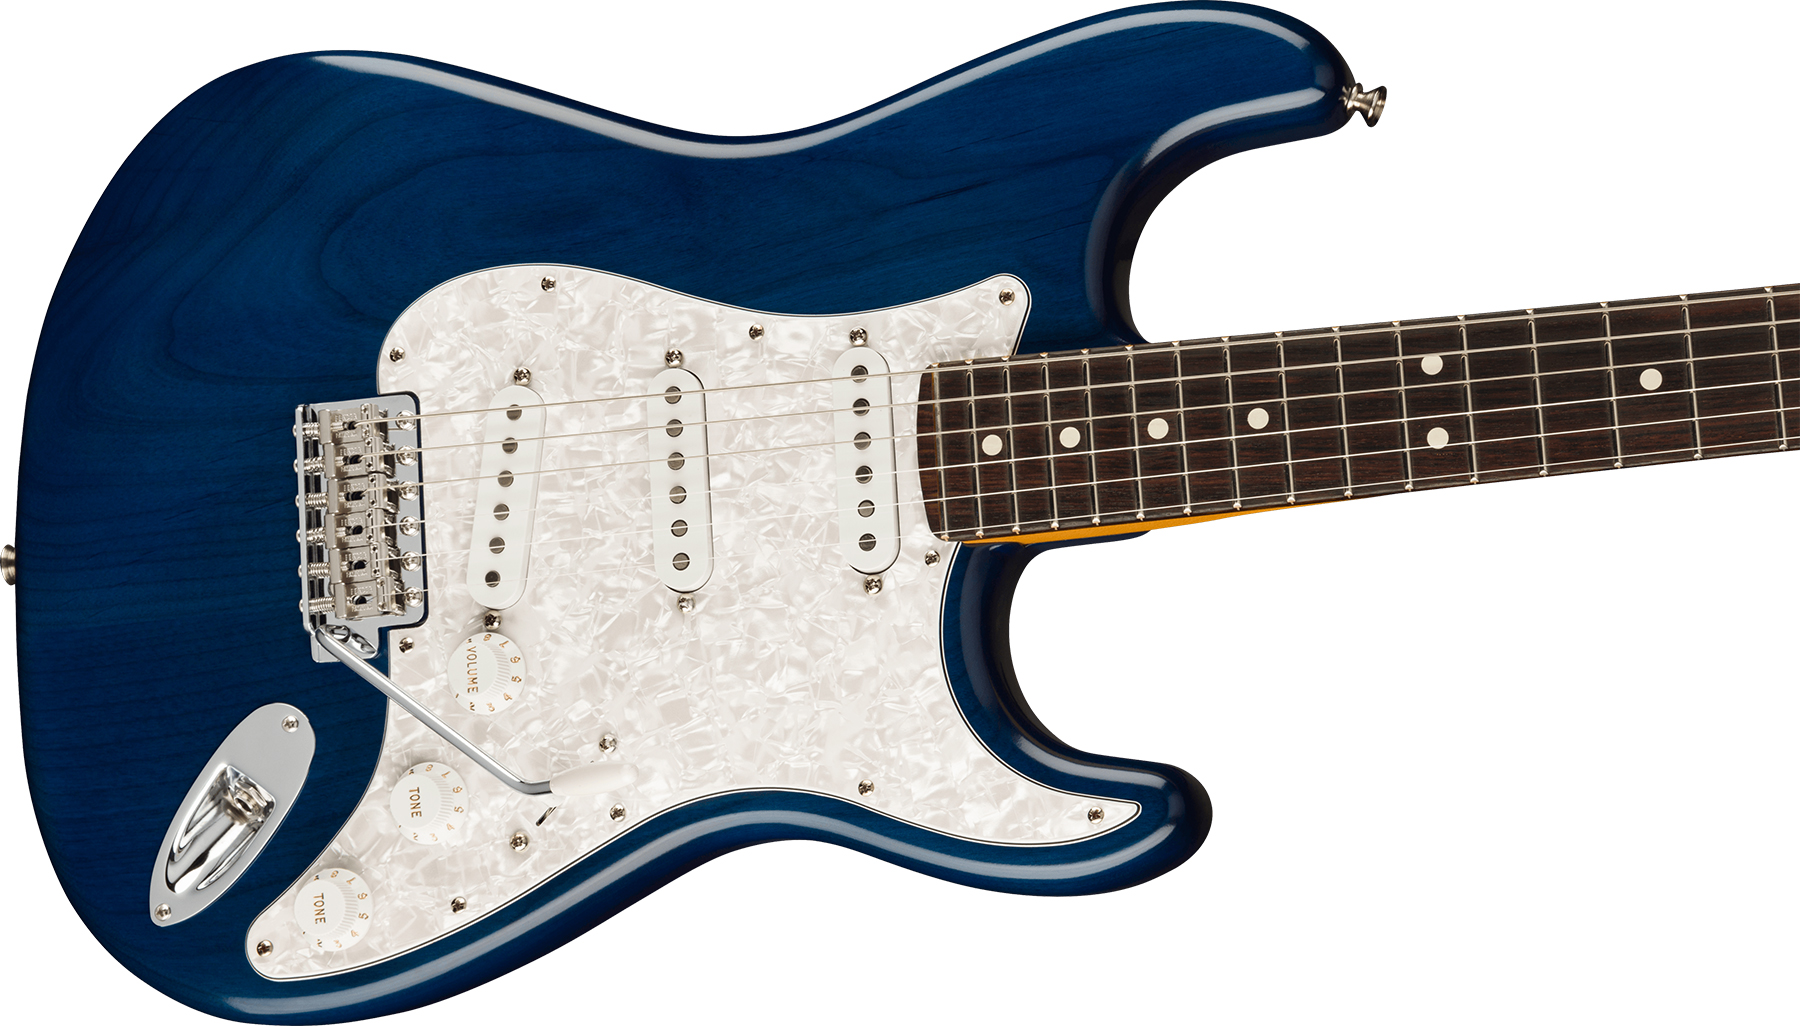 Fender Cory Wong Strat Signature Usa 3s Trem Rw - Sapphire Blue Transparent - Str shape electric guitar - Variation 2